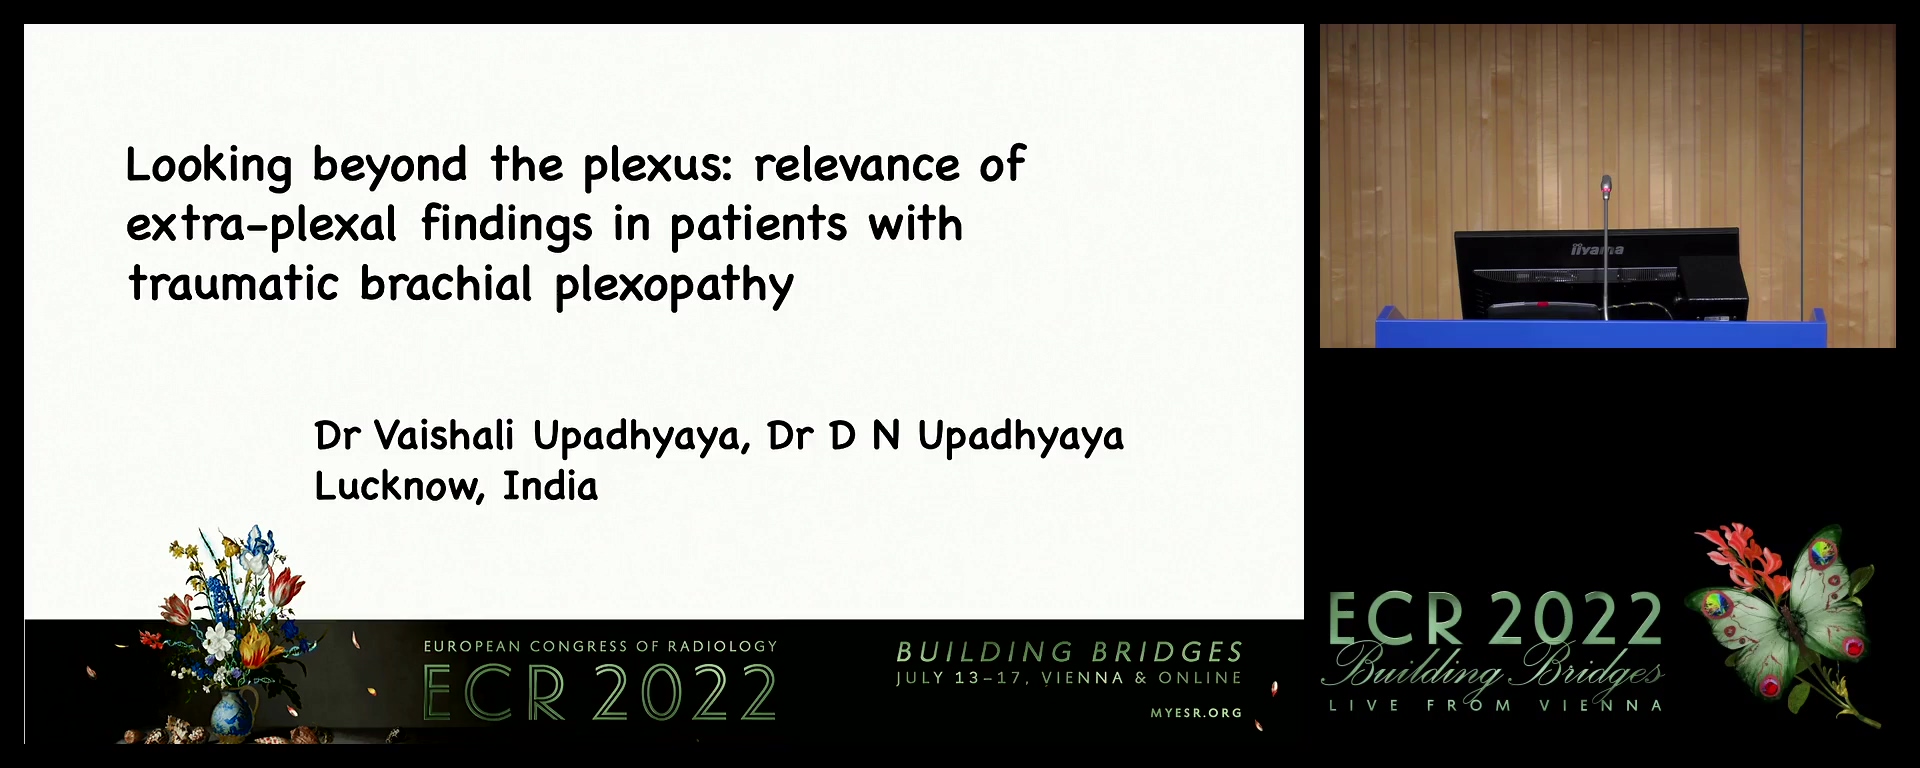 Looking beyond the plexus: relevance of extra-plexal findings in patients with traumatic brachial plexopathy - Vaishali Upadhyaya, Lucknow / IN